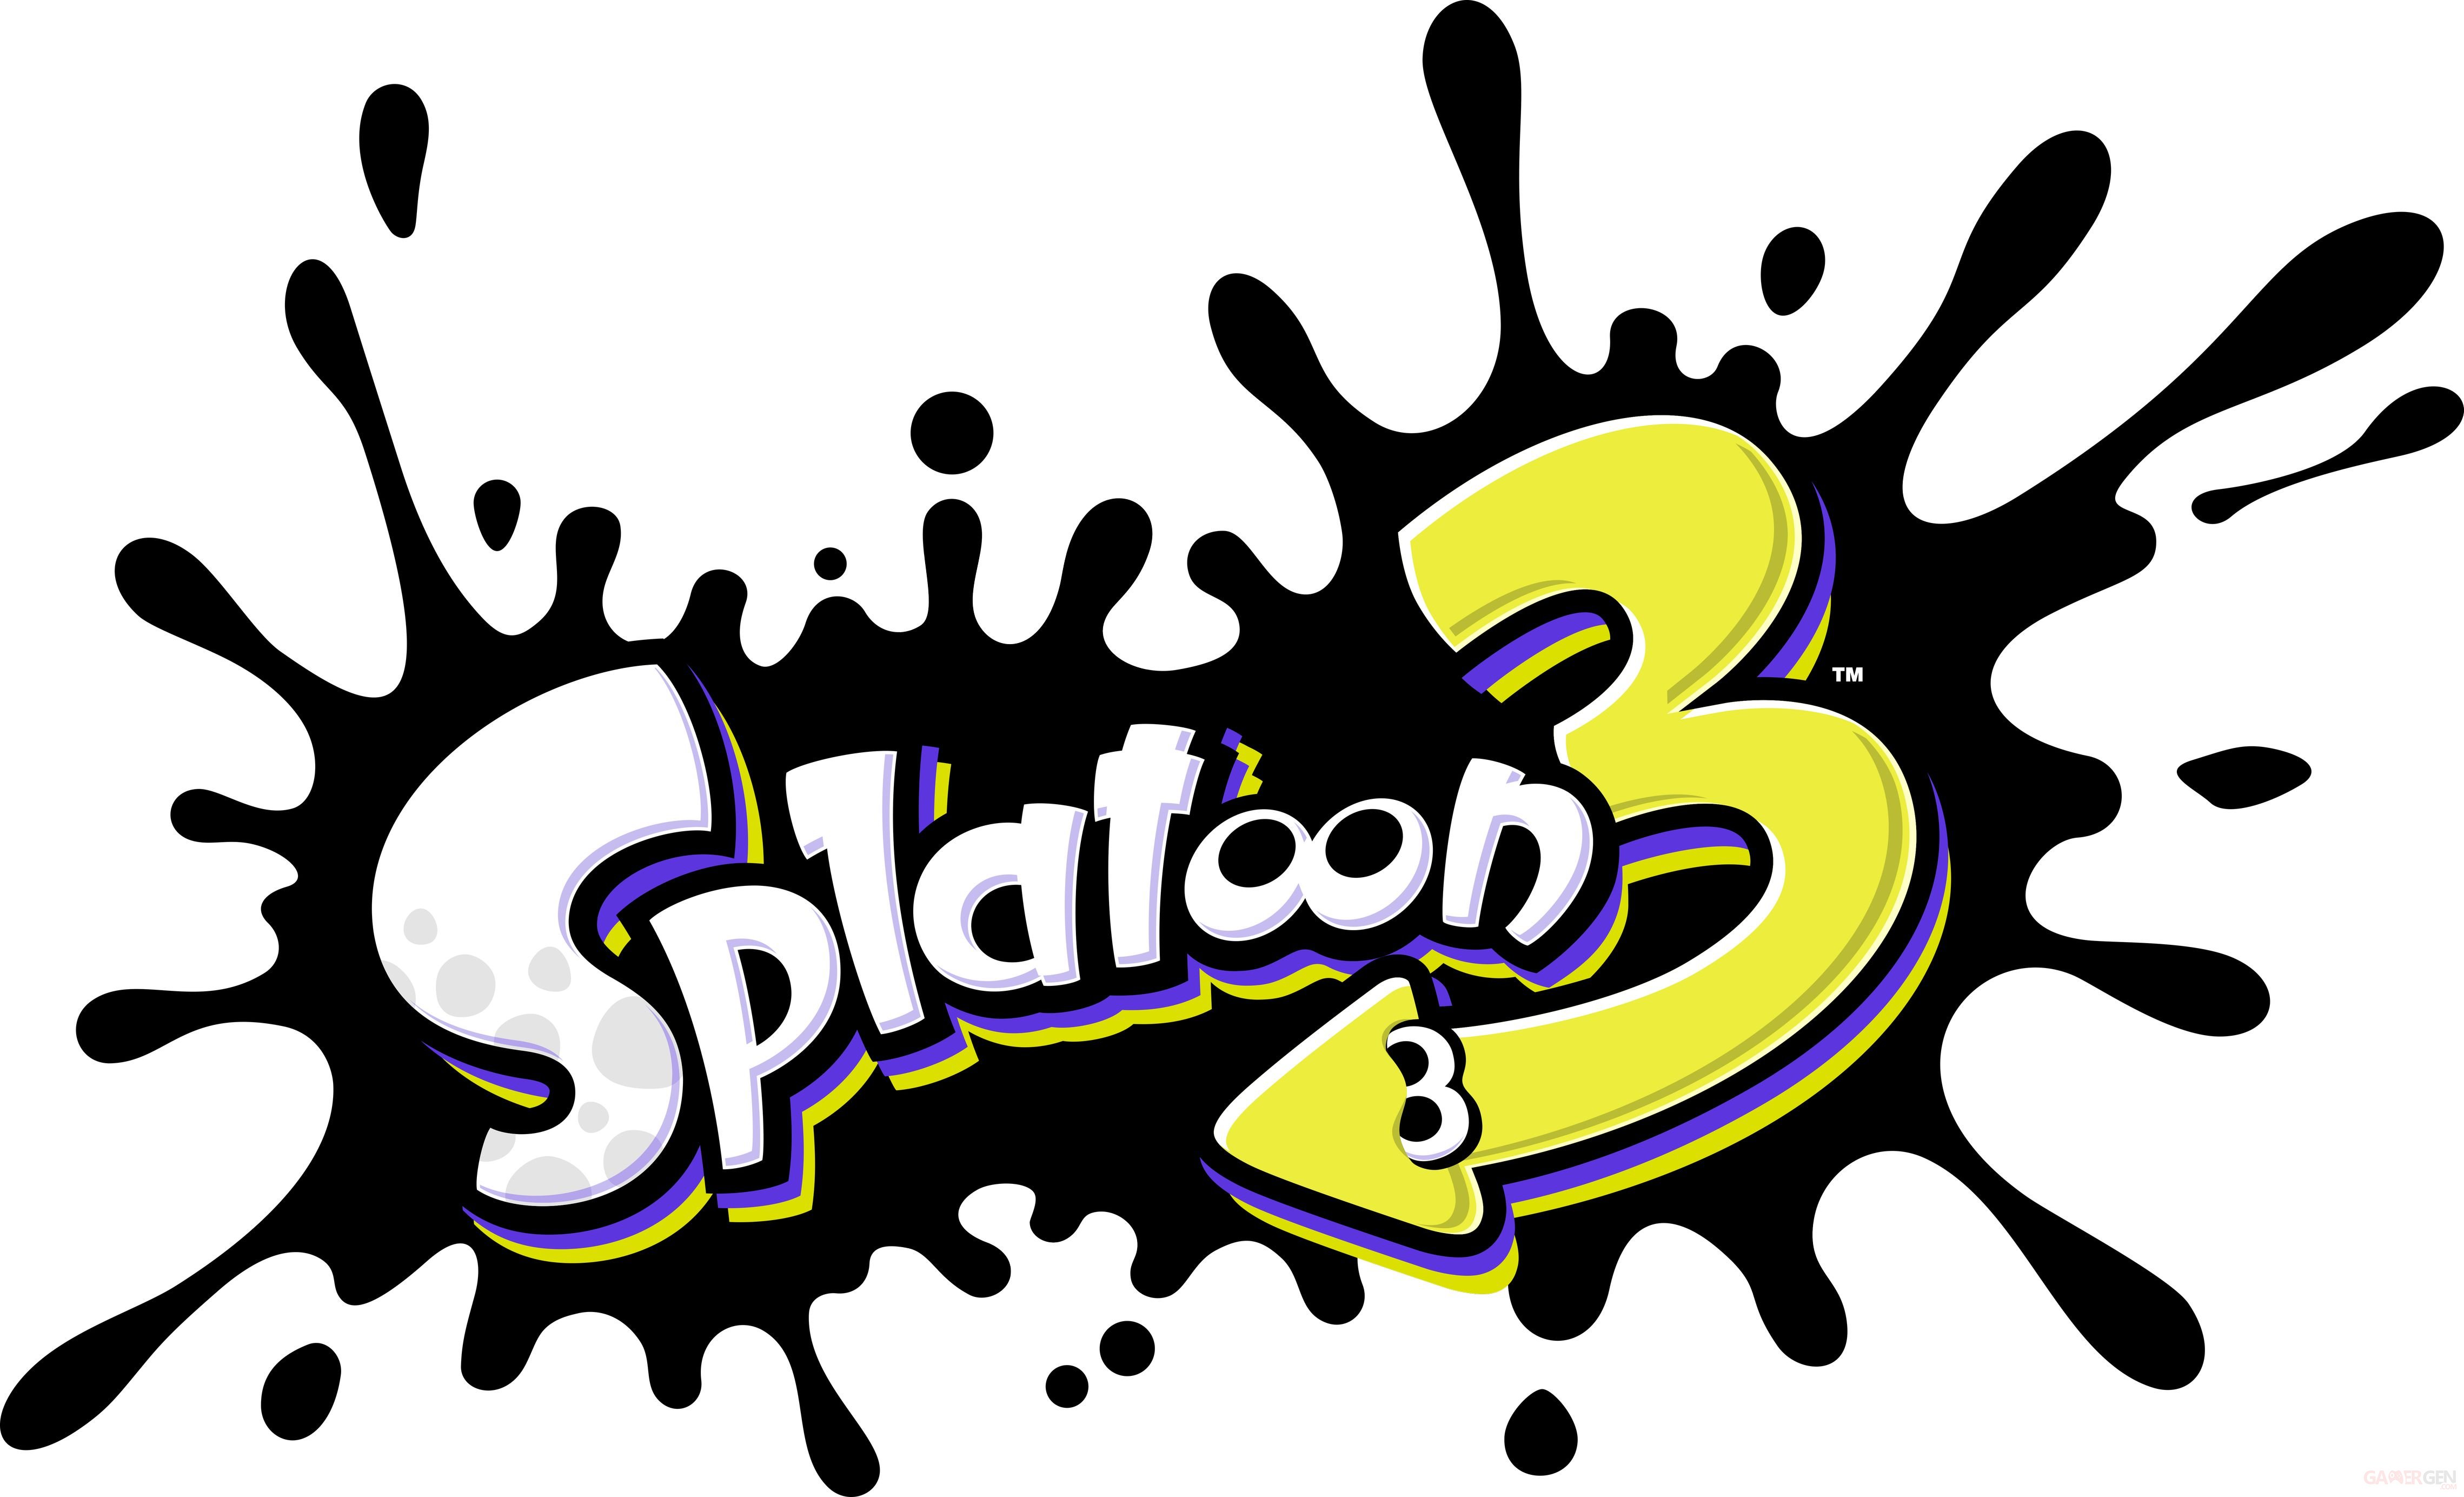 video game, splatoon 3